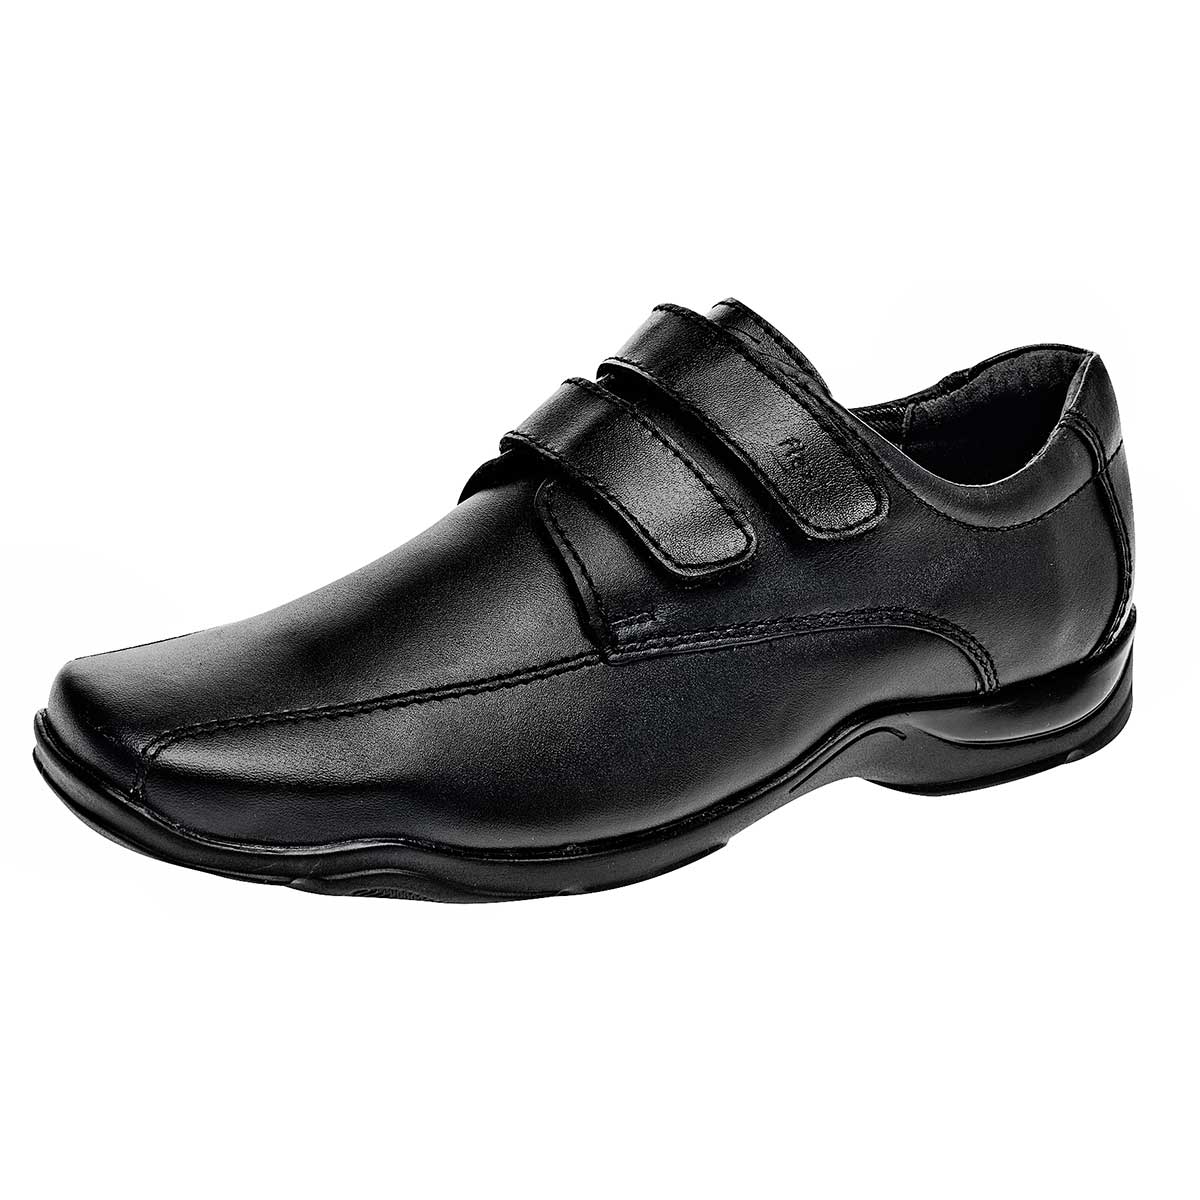 Pakar.com - Mayo: Regalos para mamá | Zapato casual para joven cod-69699